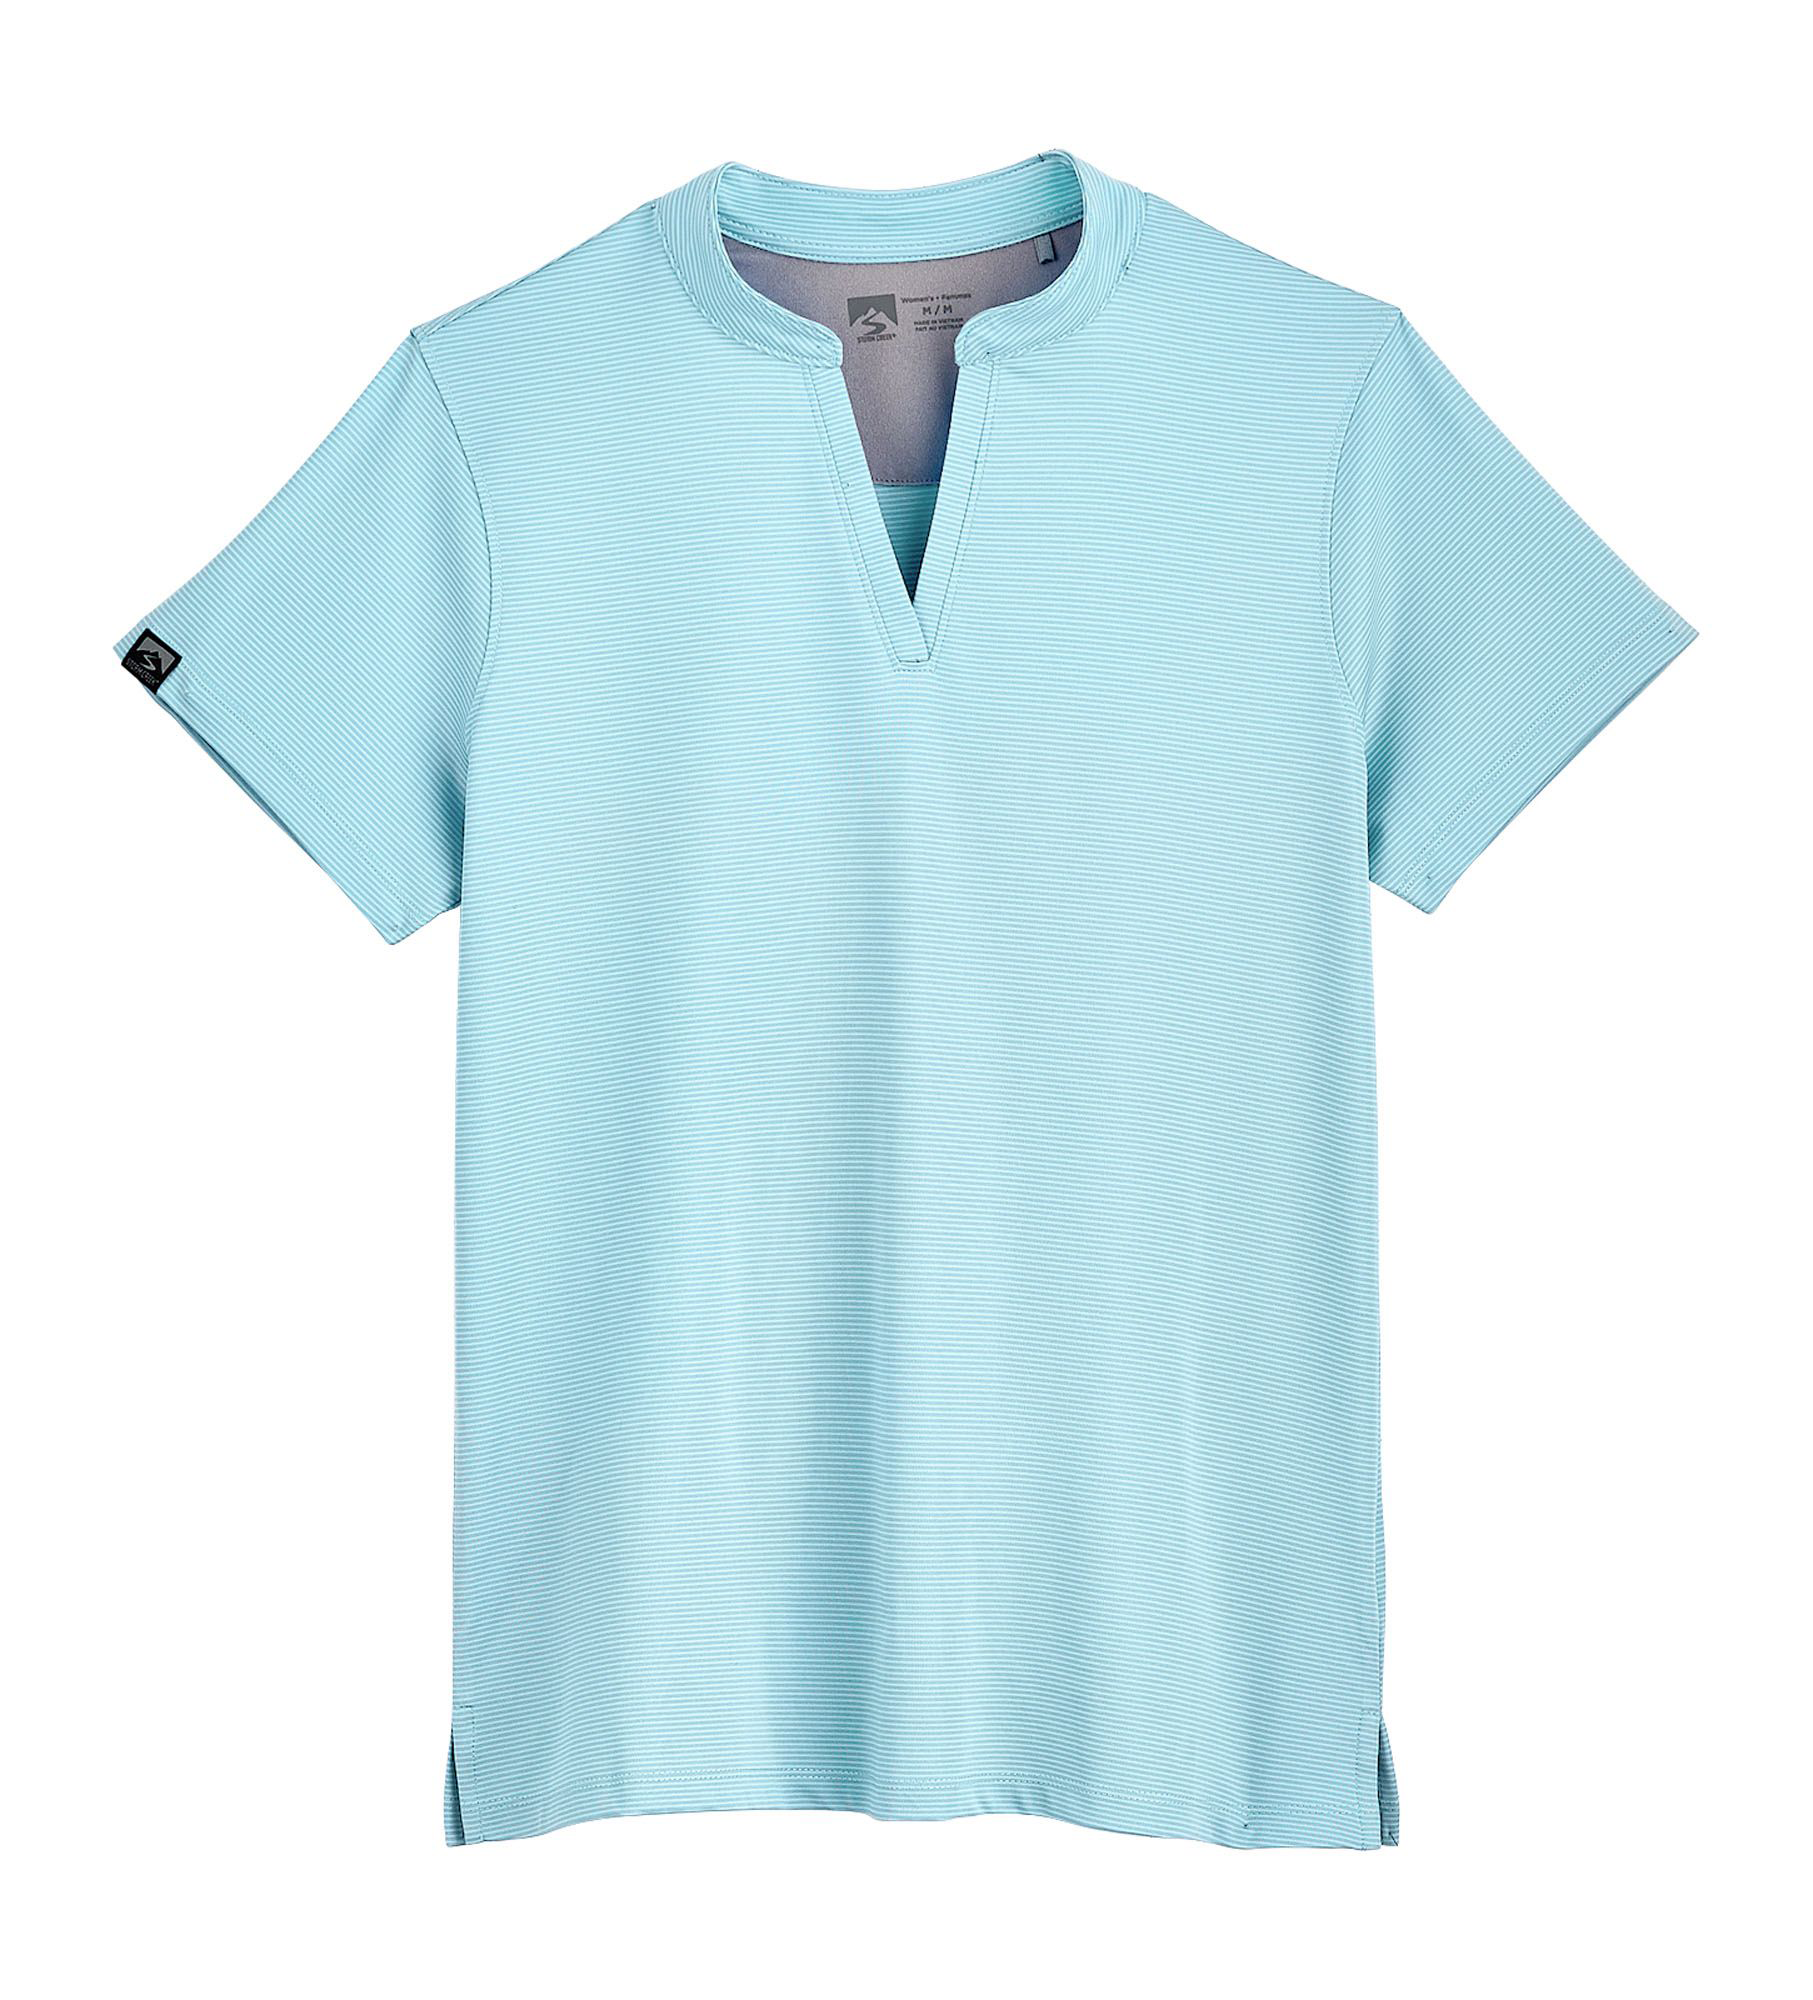 Storm Creek Optimist Short-Sleeve Polo Shirt for Ladies - Glacier Blue - S